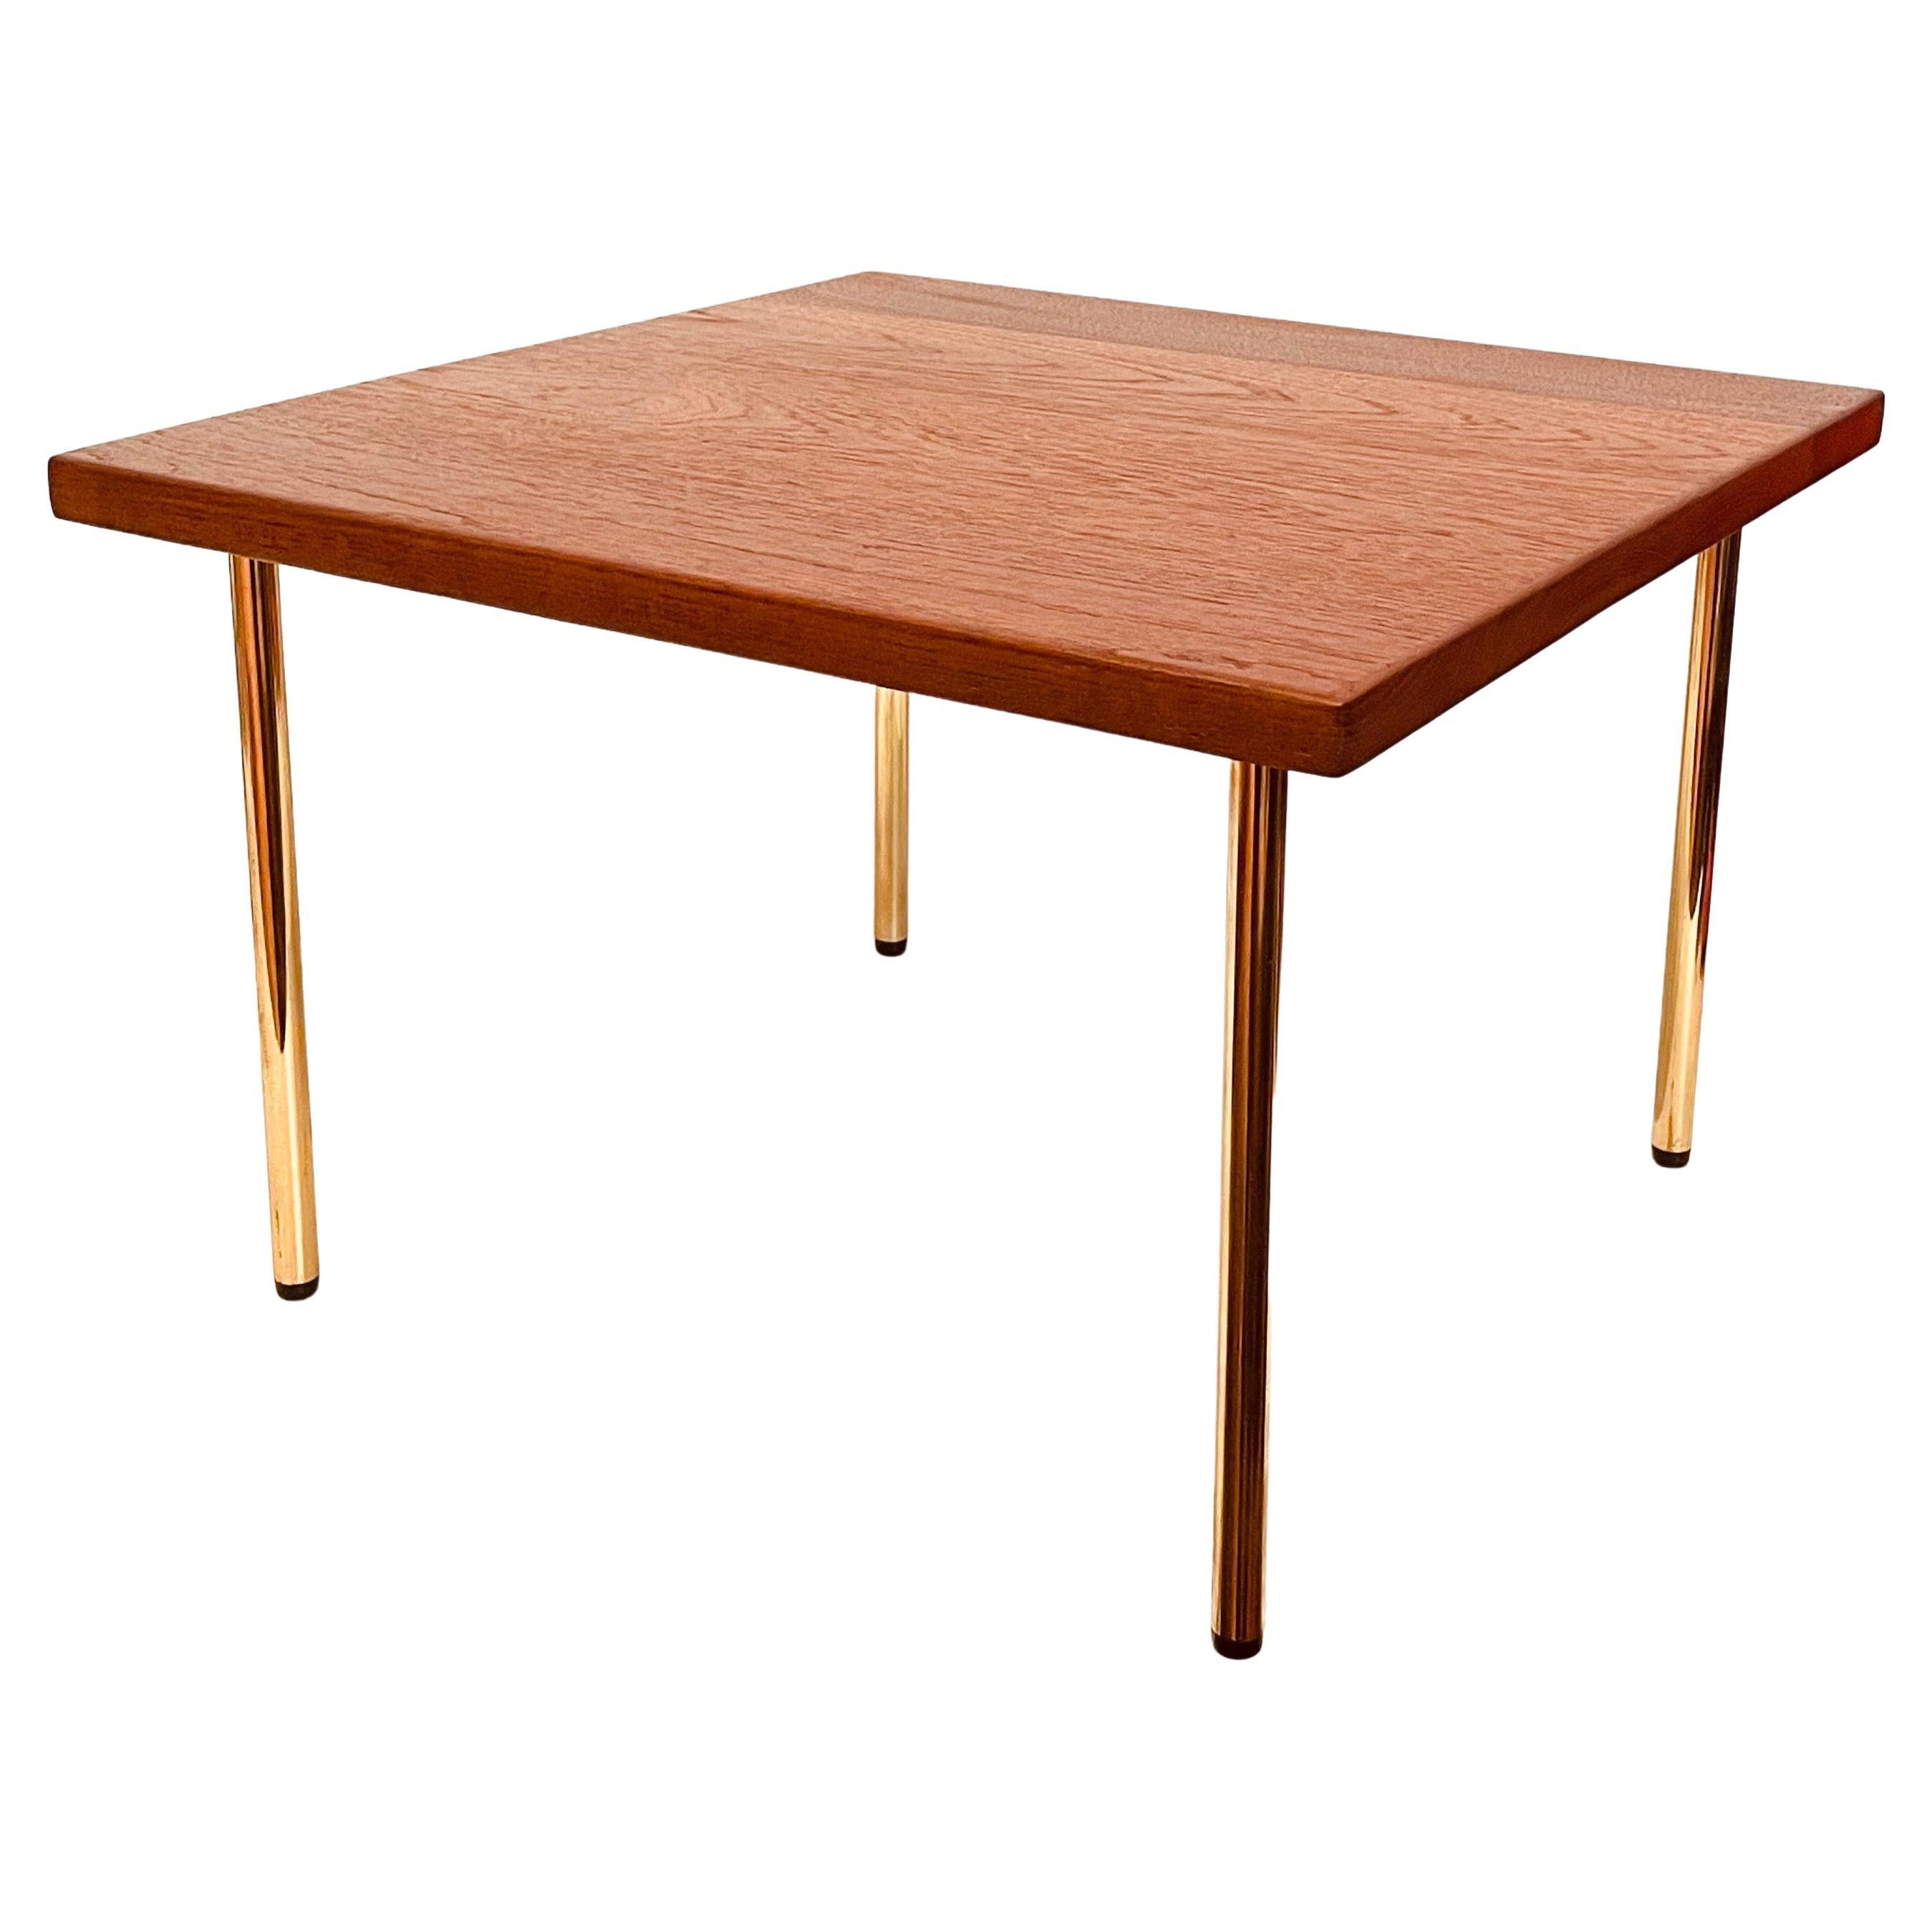 Danish Modern Solid Teak Small Table Designed by Peter Hvidt